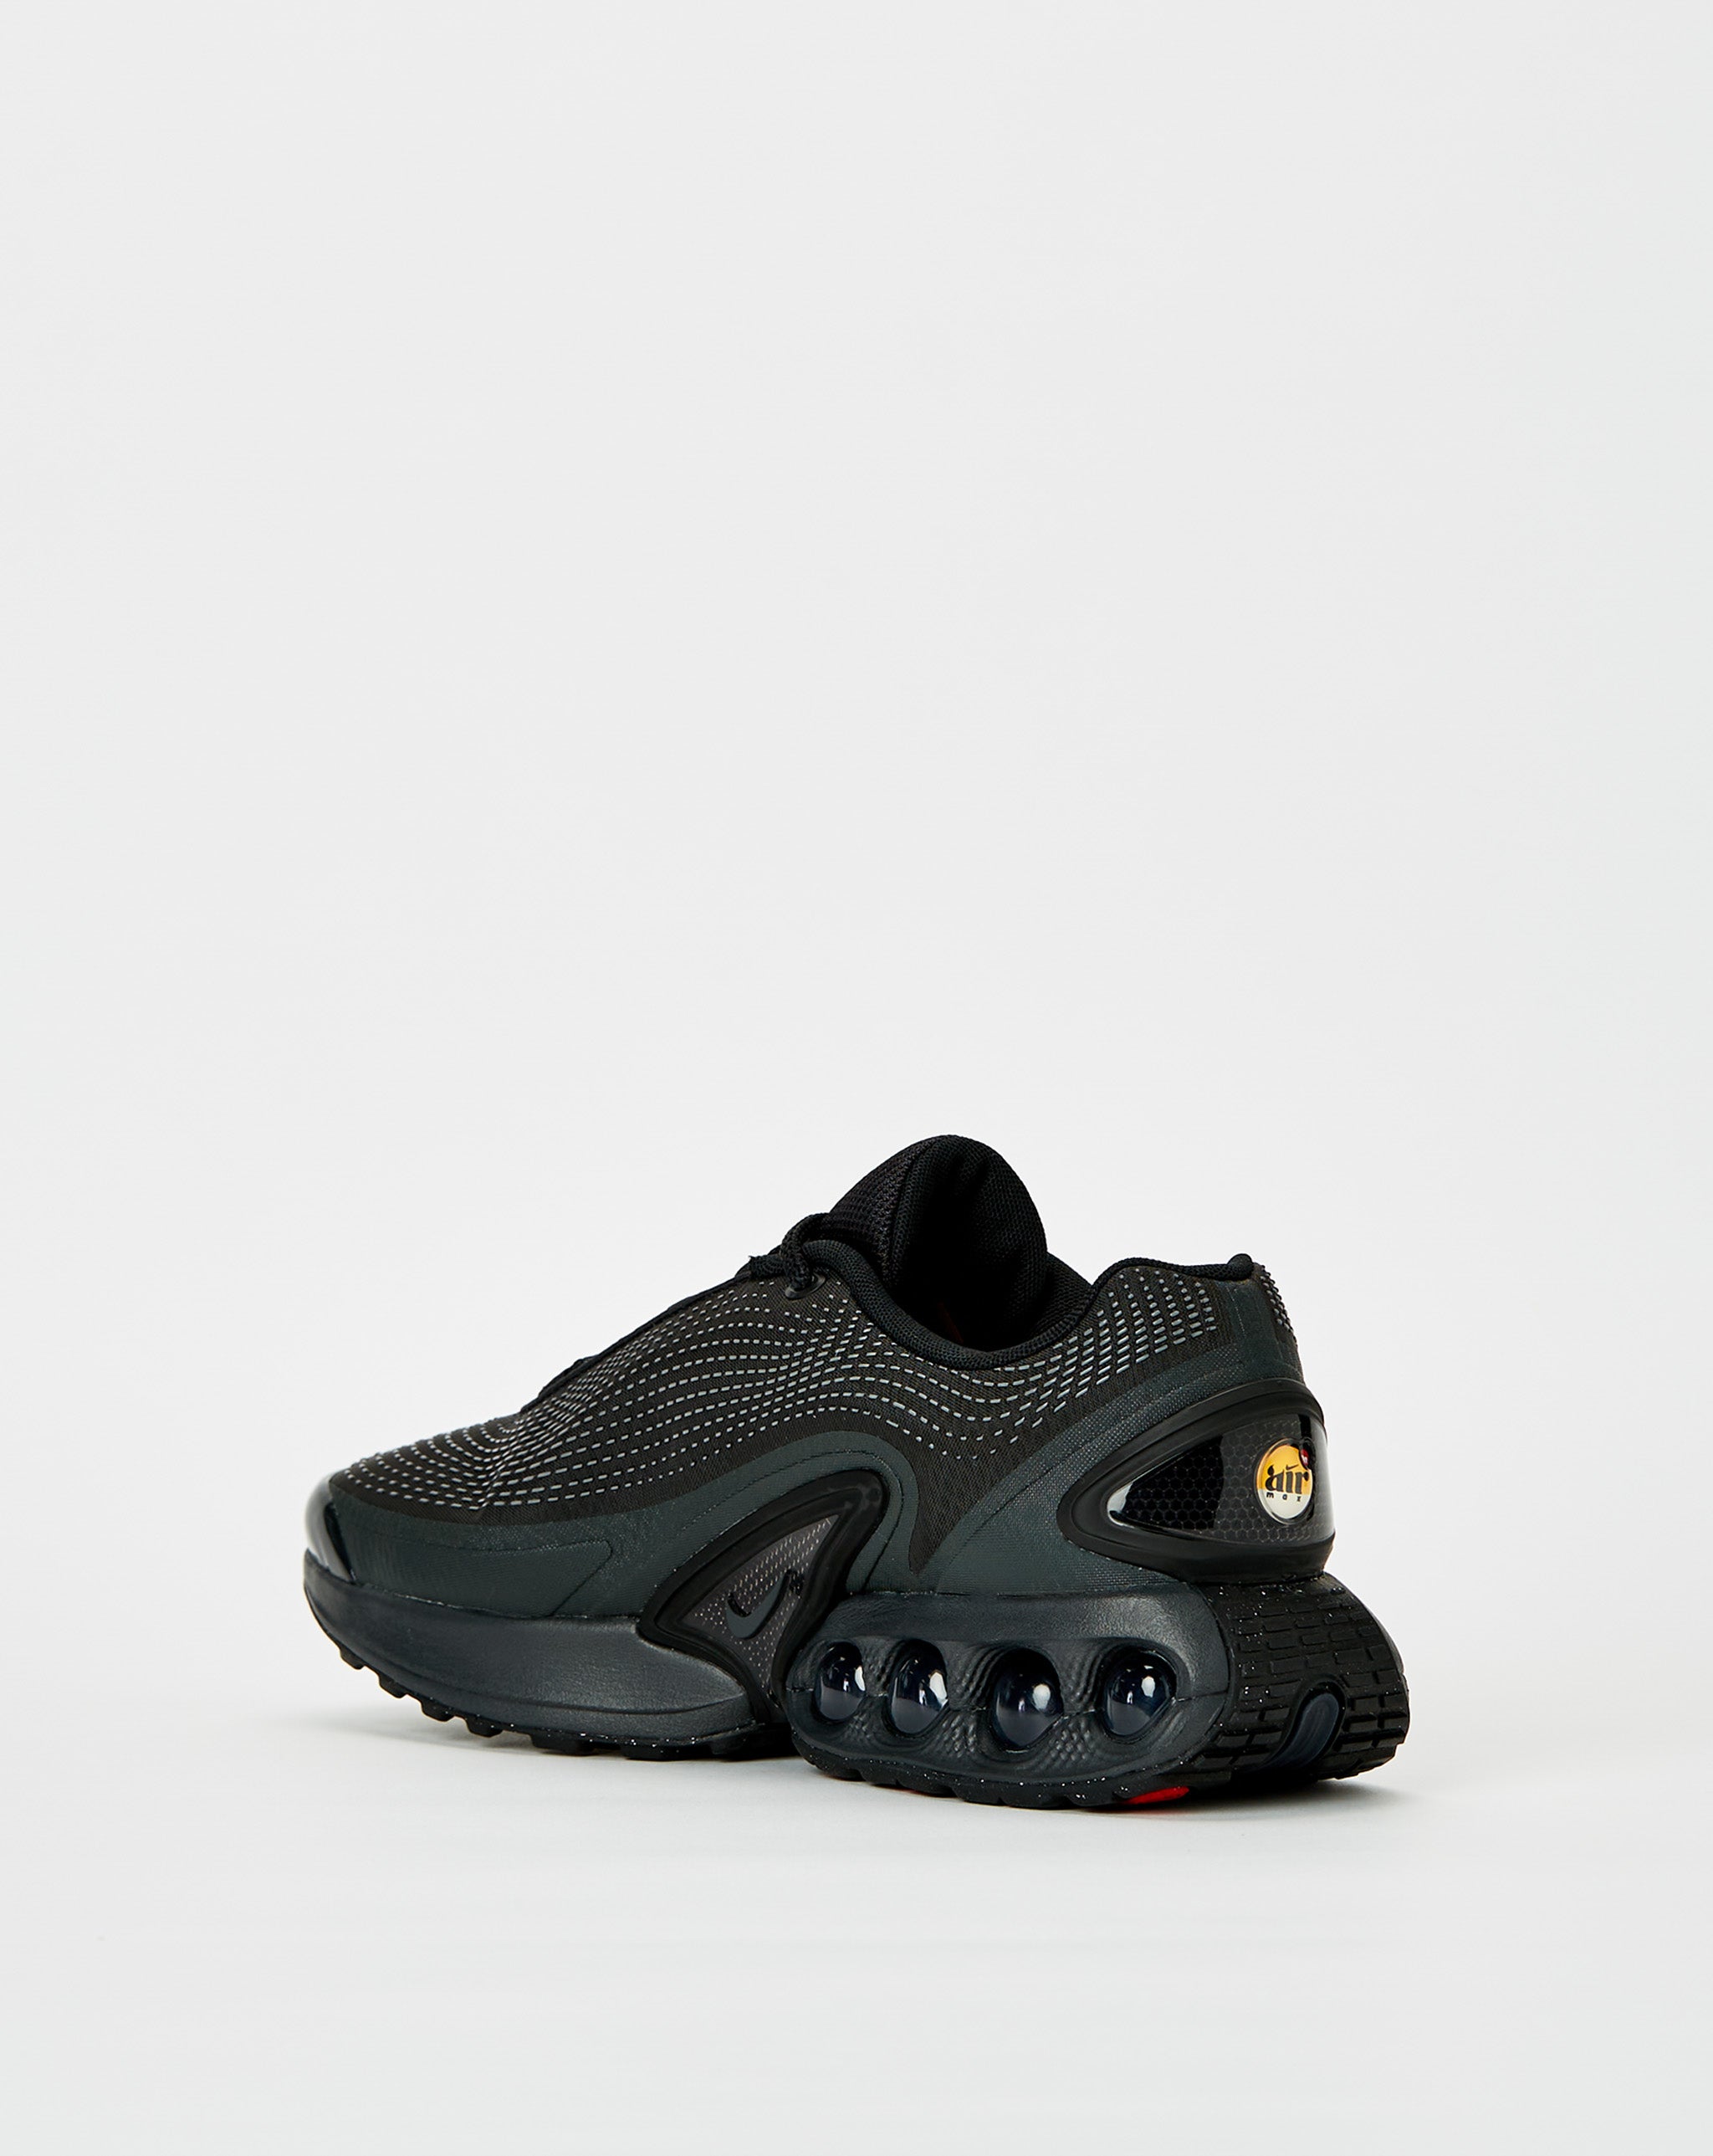 nike 27.5cm nike 27.5cm Air Max Verona Marathon Running Shoes Sneakers CV7057-001  - Cheap Urlfreeze Jordan outlet